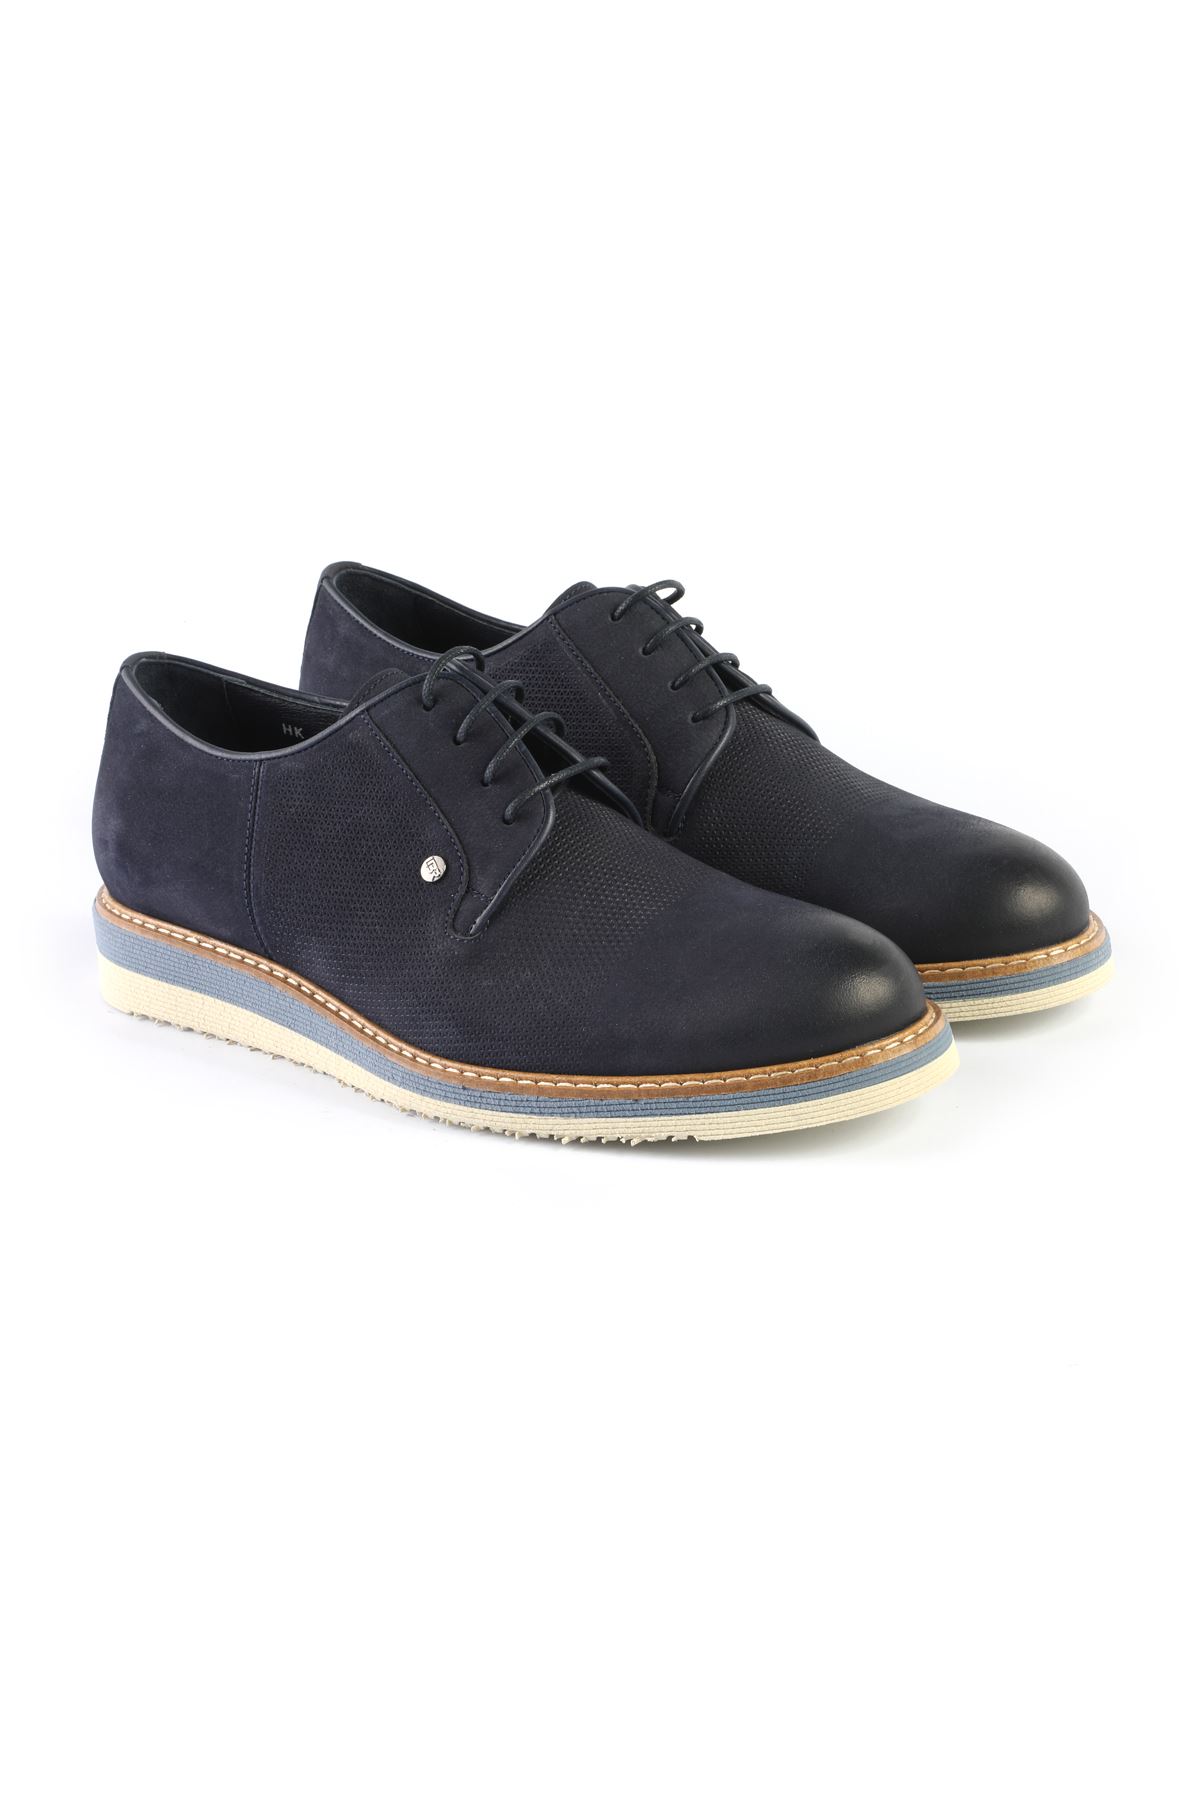 Libero 3052 Navy Blue Casual Shoes